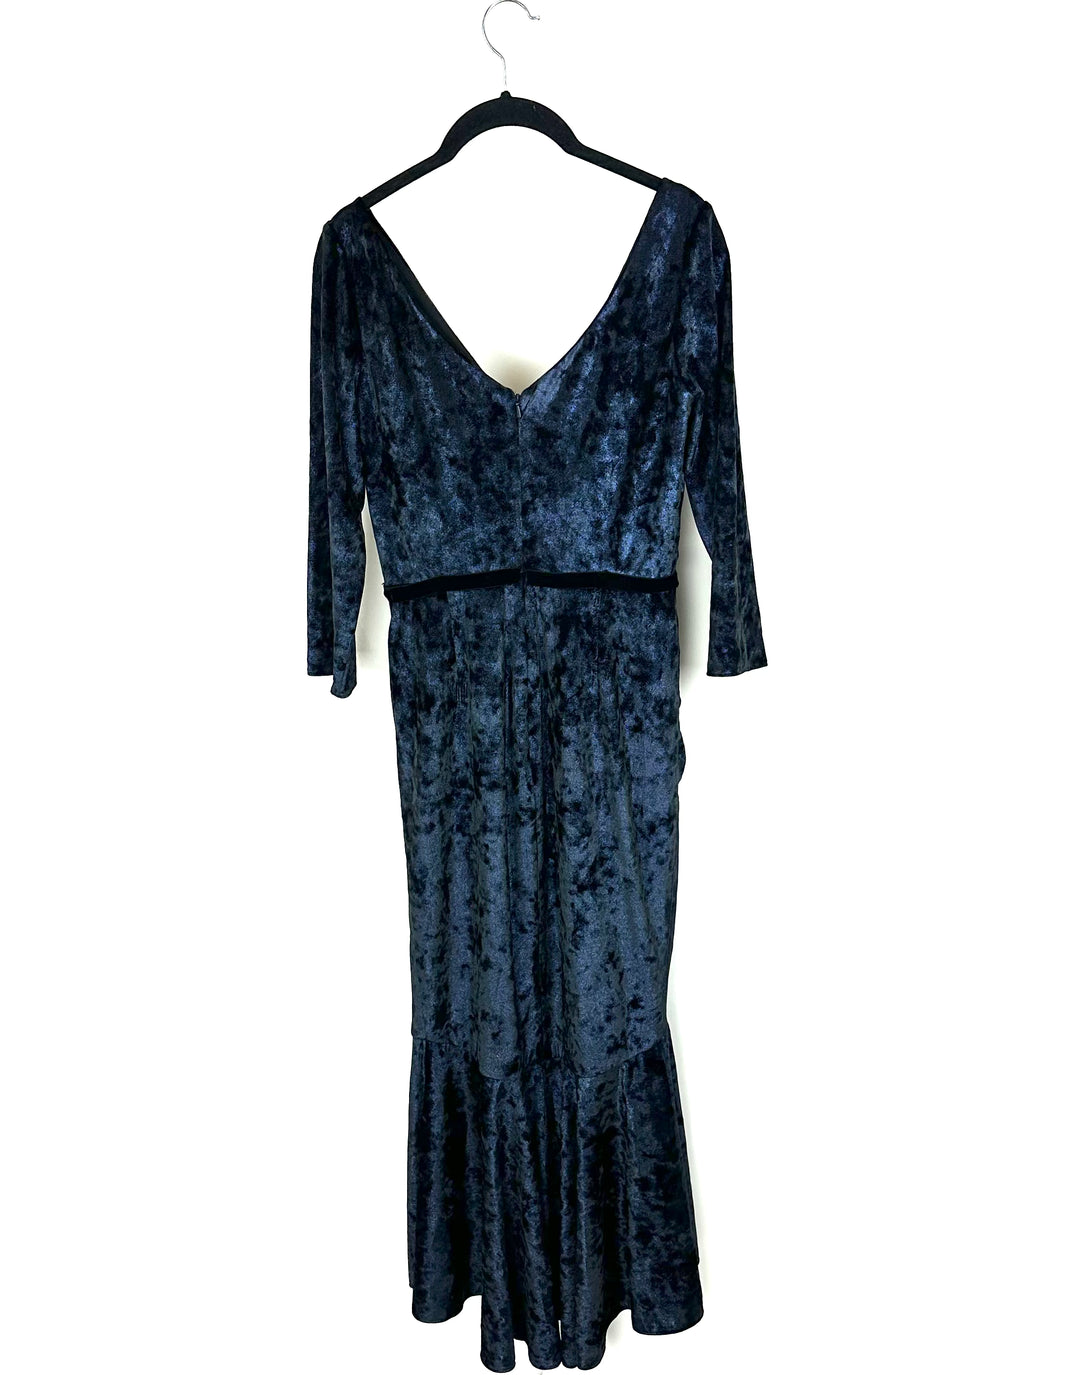 Navy Blue Midi Dress - Size 0